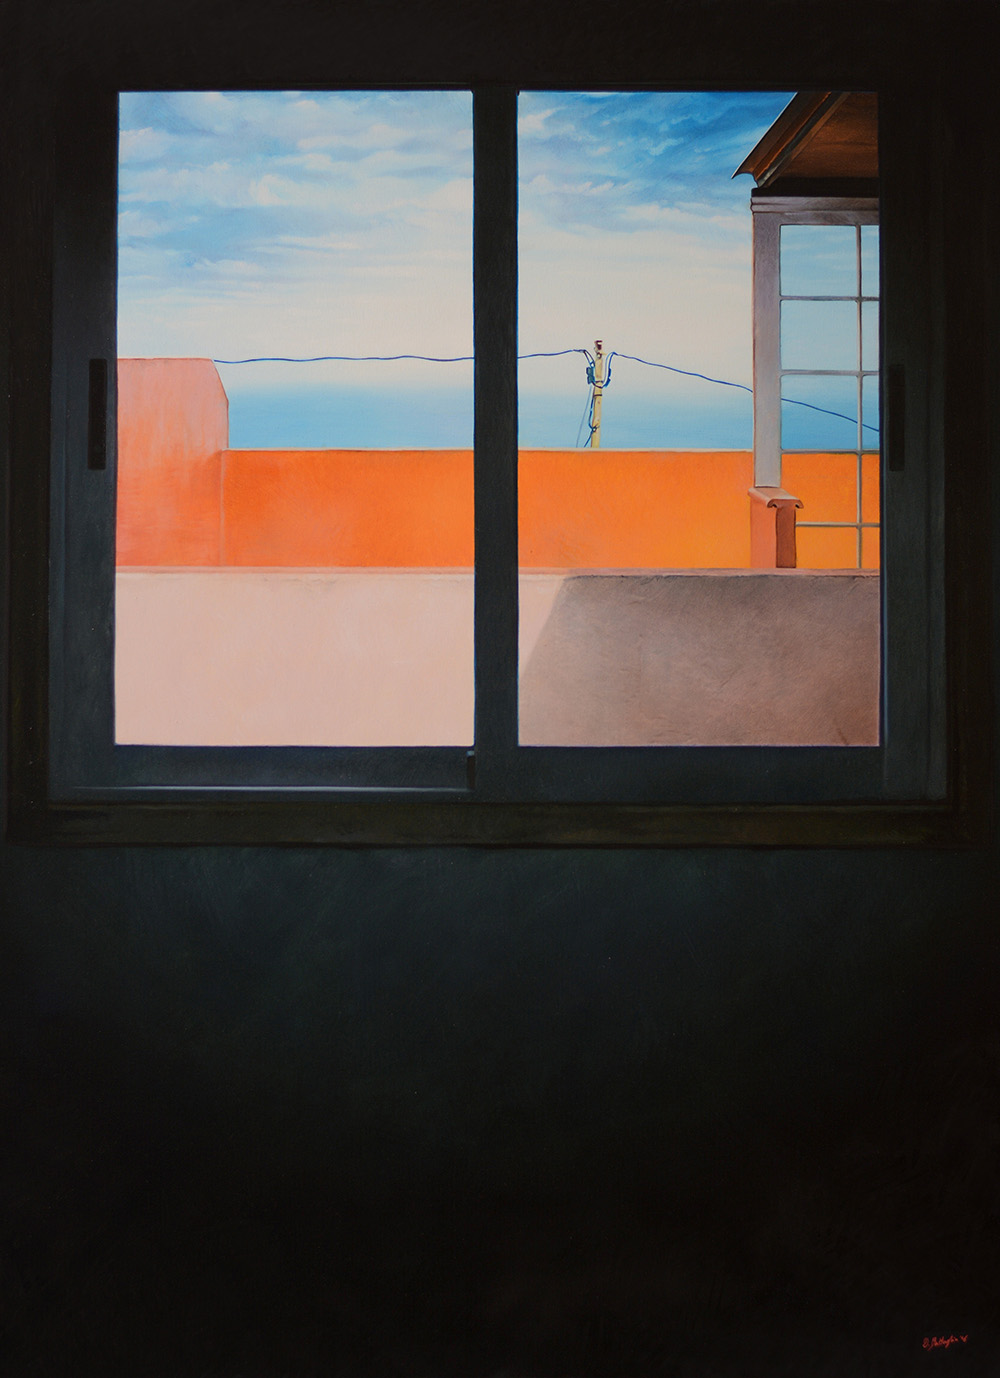 
'Waiting for the Summer'
(2016)
óleo sobre lienzo,
100x73 cm
